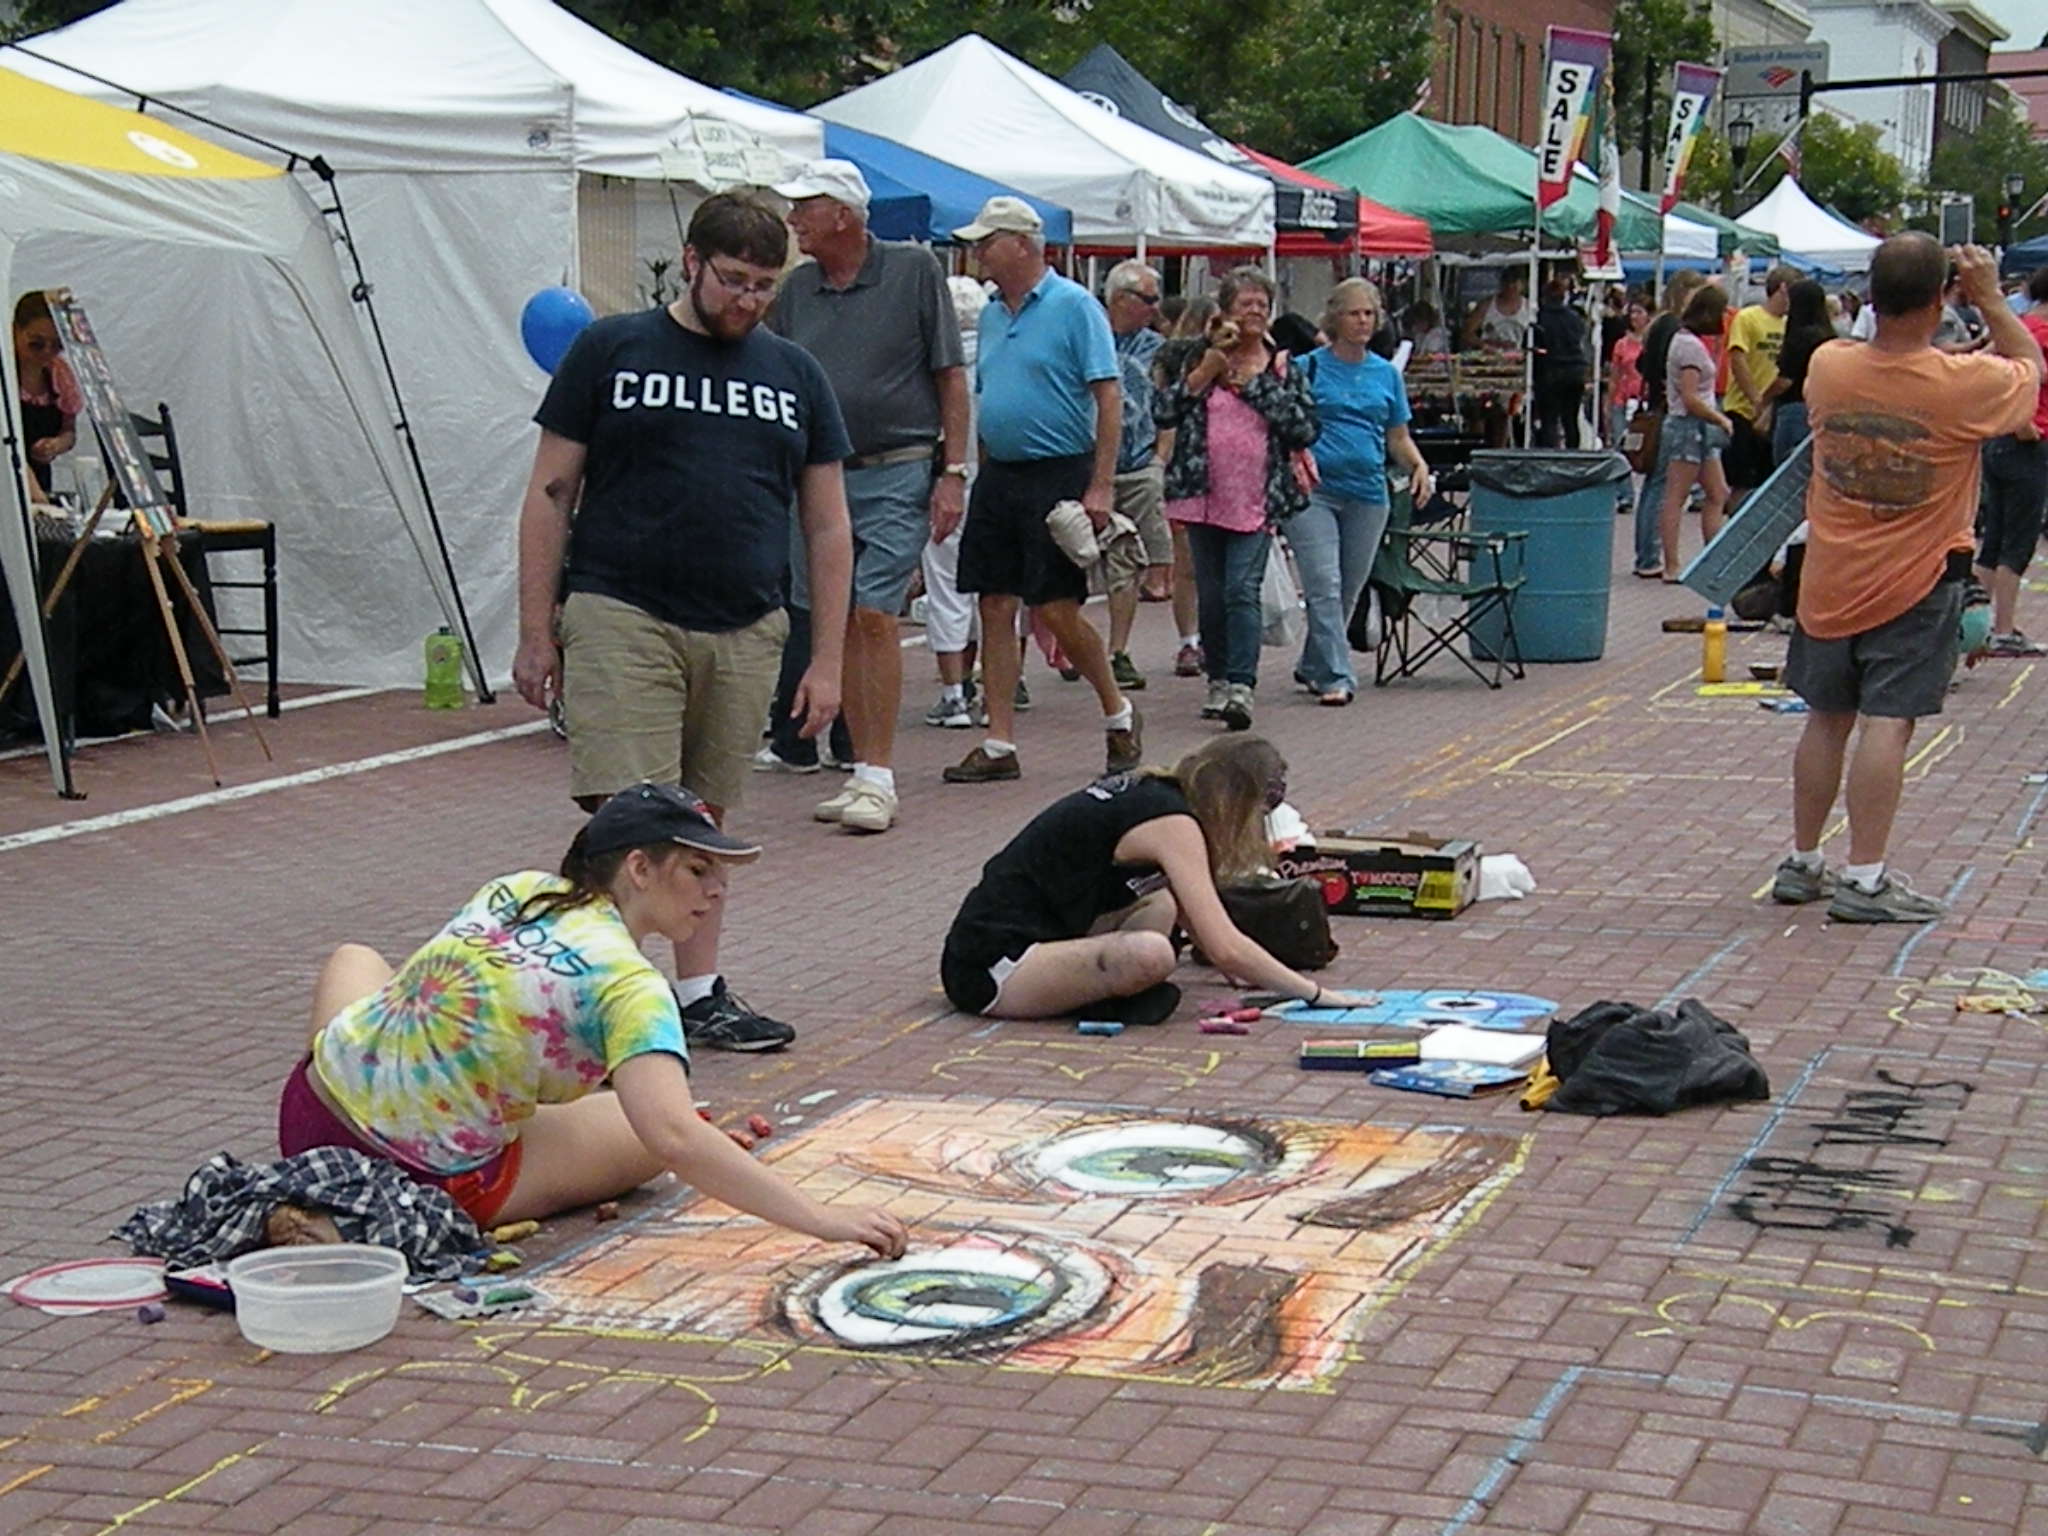 East Aurora’s annual Street Festival & Sidewalk Sale returns on July 29